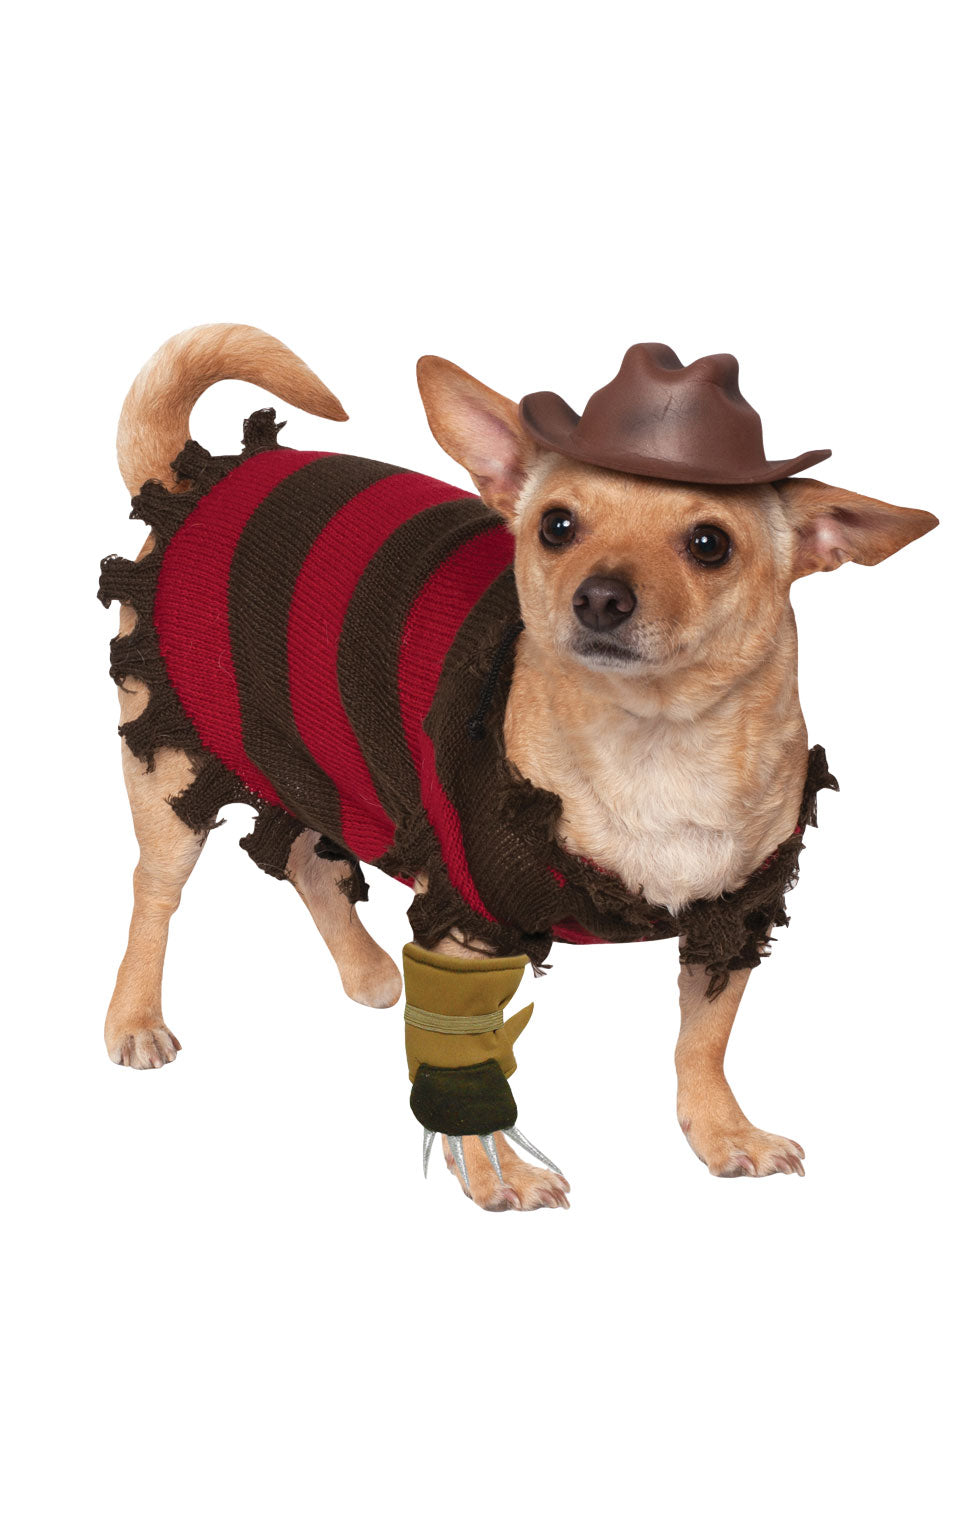 A Nightmare on Elm Street, Freddy Krueger Halloween Pet Dog Costume, Size Small